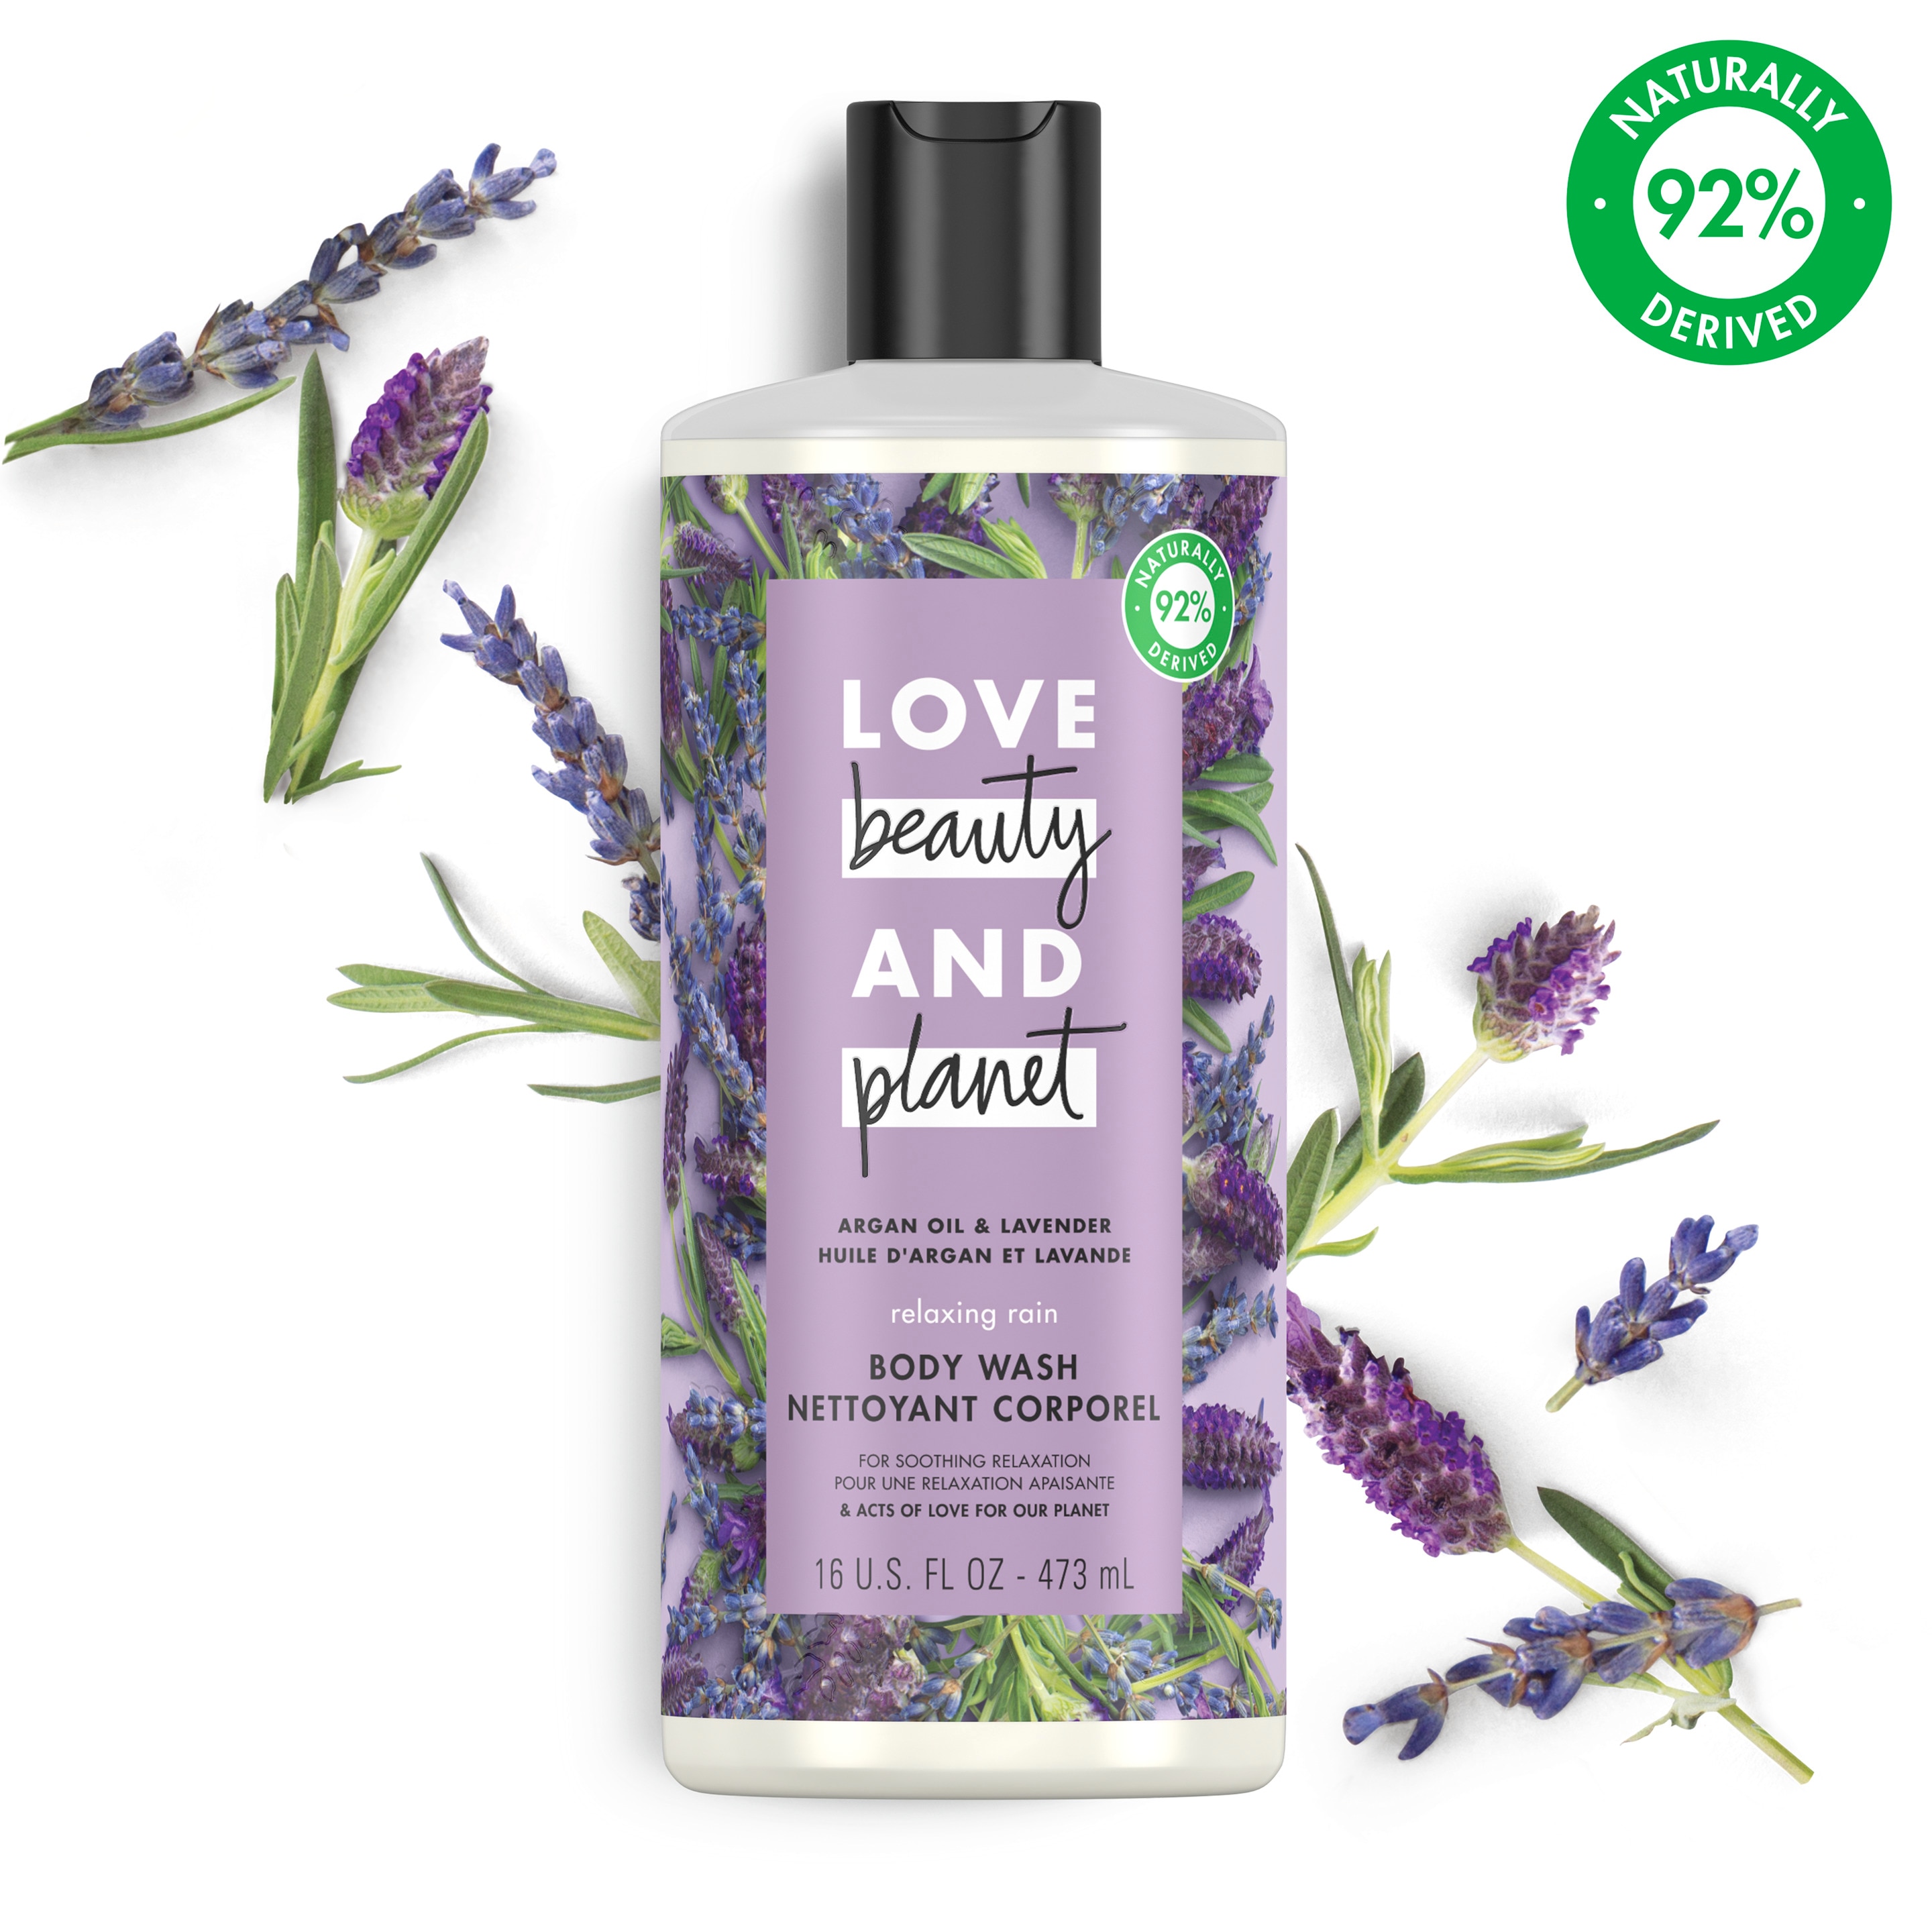 Argan Oil & Lavender Body Wash